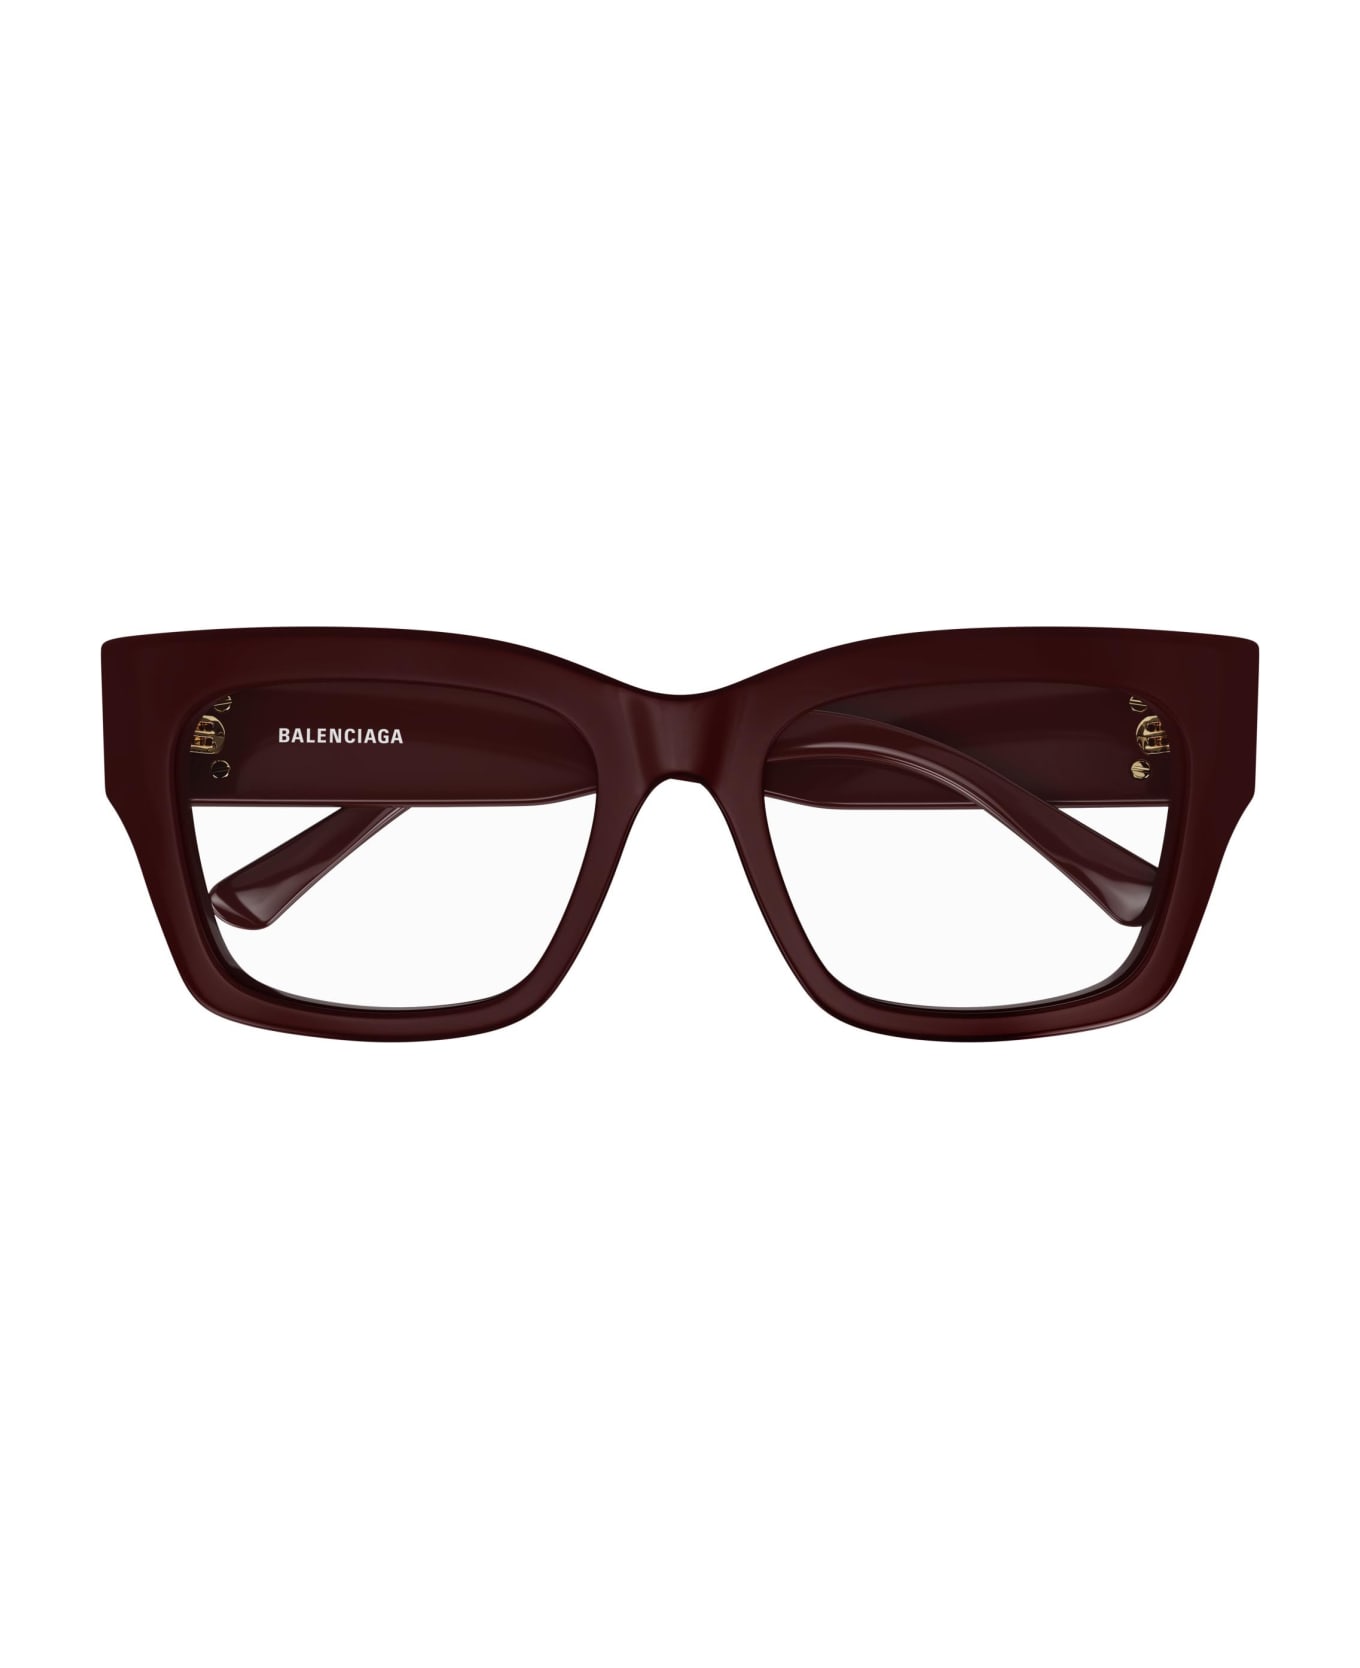 Balenciaga Eyewear Glasses - Burgundy アイウェア